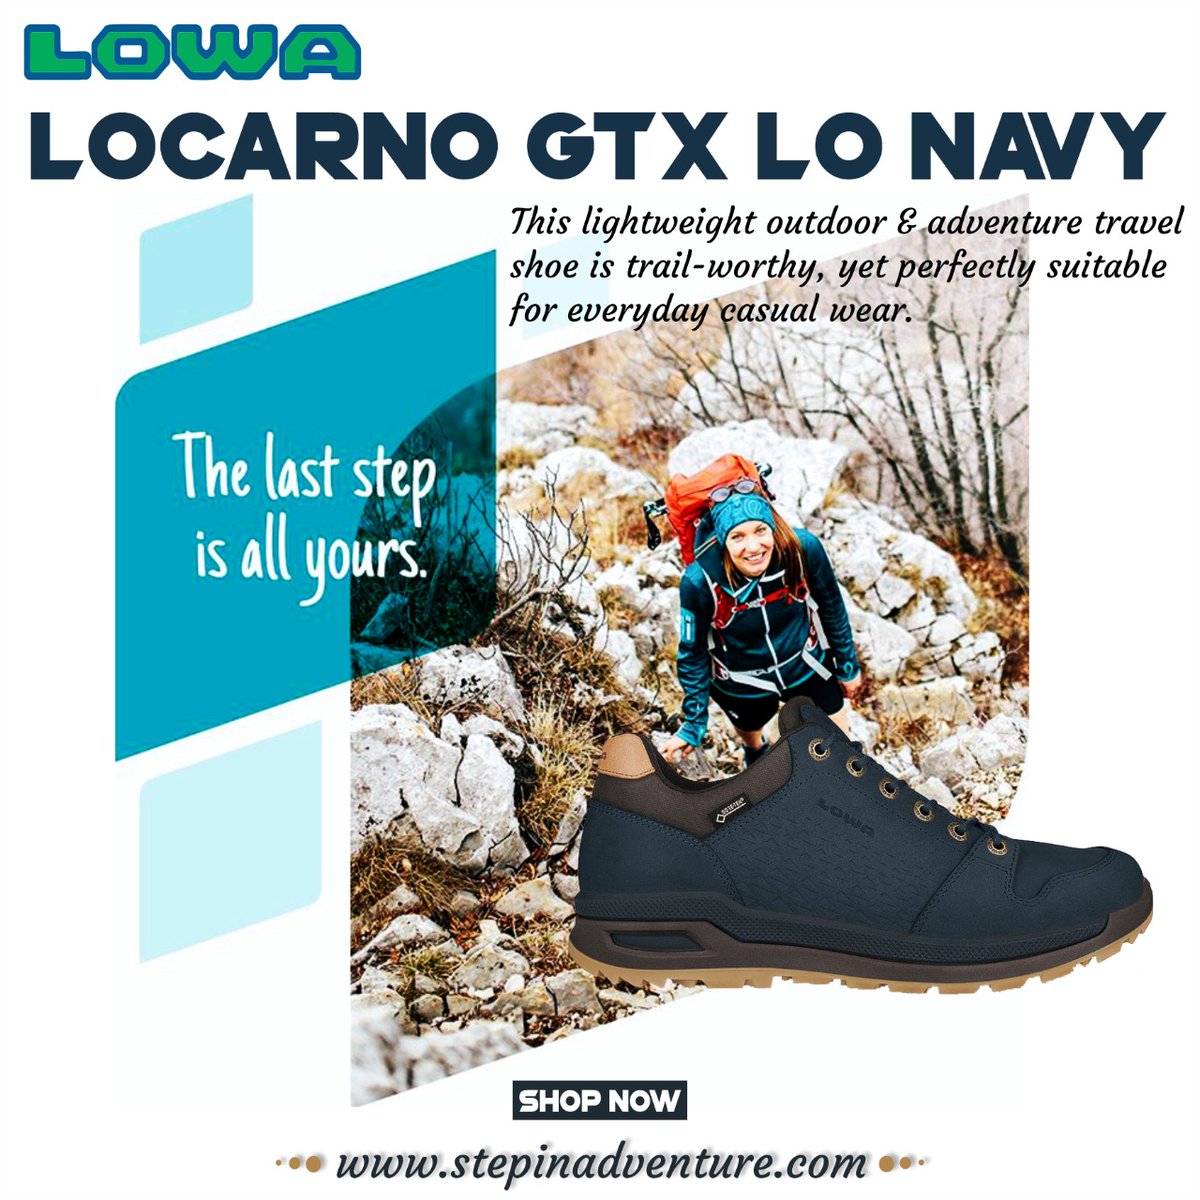 The Lowa #Locarno GTX Lo is a #functional hybrid shoe with a casual look.
bit.ly/32cGU1a
#lowa #lovelowa #lowaboots #hikingboot #casualshoes #shoes #hikingadventures #hikingkit #hikinggear #hikingtime #outdoor
#locarnogtx #waterproof #lowalocarnoGTX #enjoylife #camping